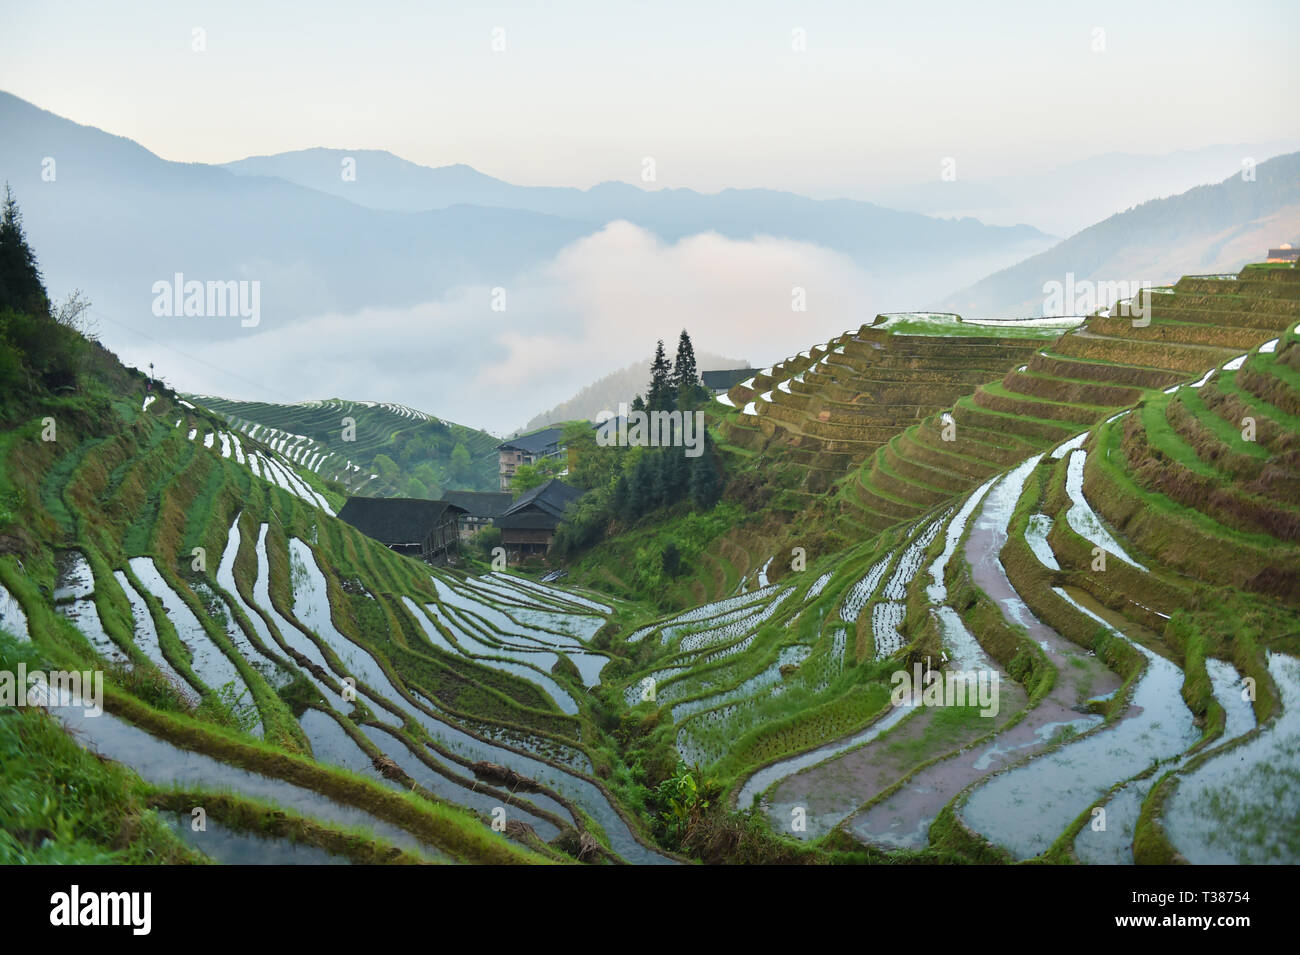 Longsheng. 7 Apr, 2019. Foto am 7. April 2019 zeigt eine Ansicht der Ping" ein Dorf in Longsheng County, South China Guangxi Zhuang autonomen Region berücksichtigt. Quelle: Cao Yiming/Xinhua/Alamy leben Nachrichten Stockfoto